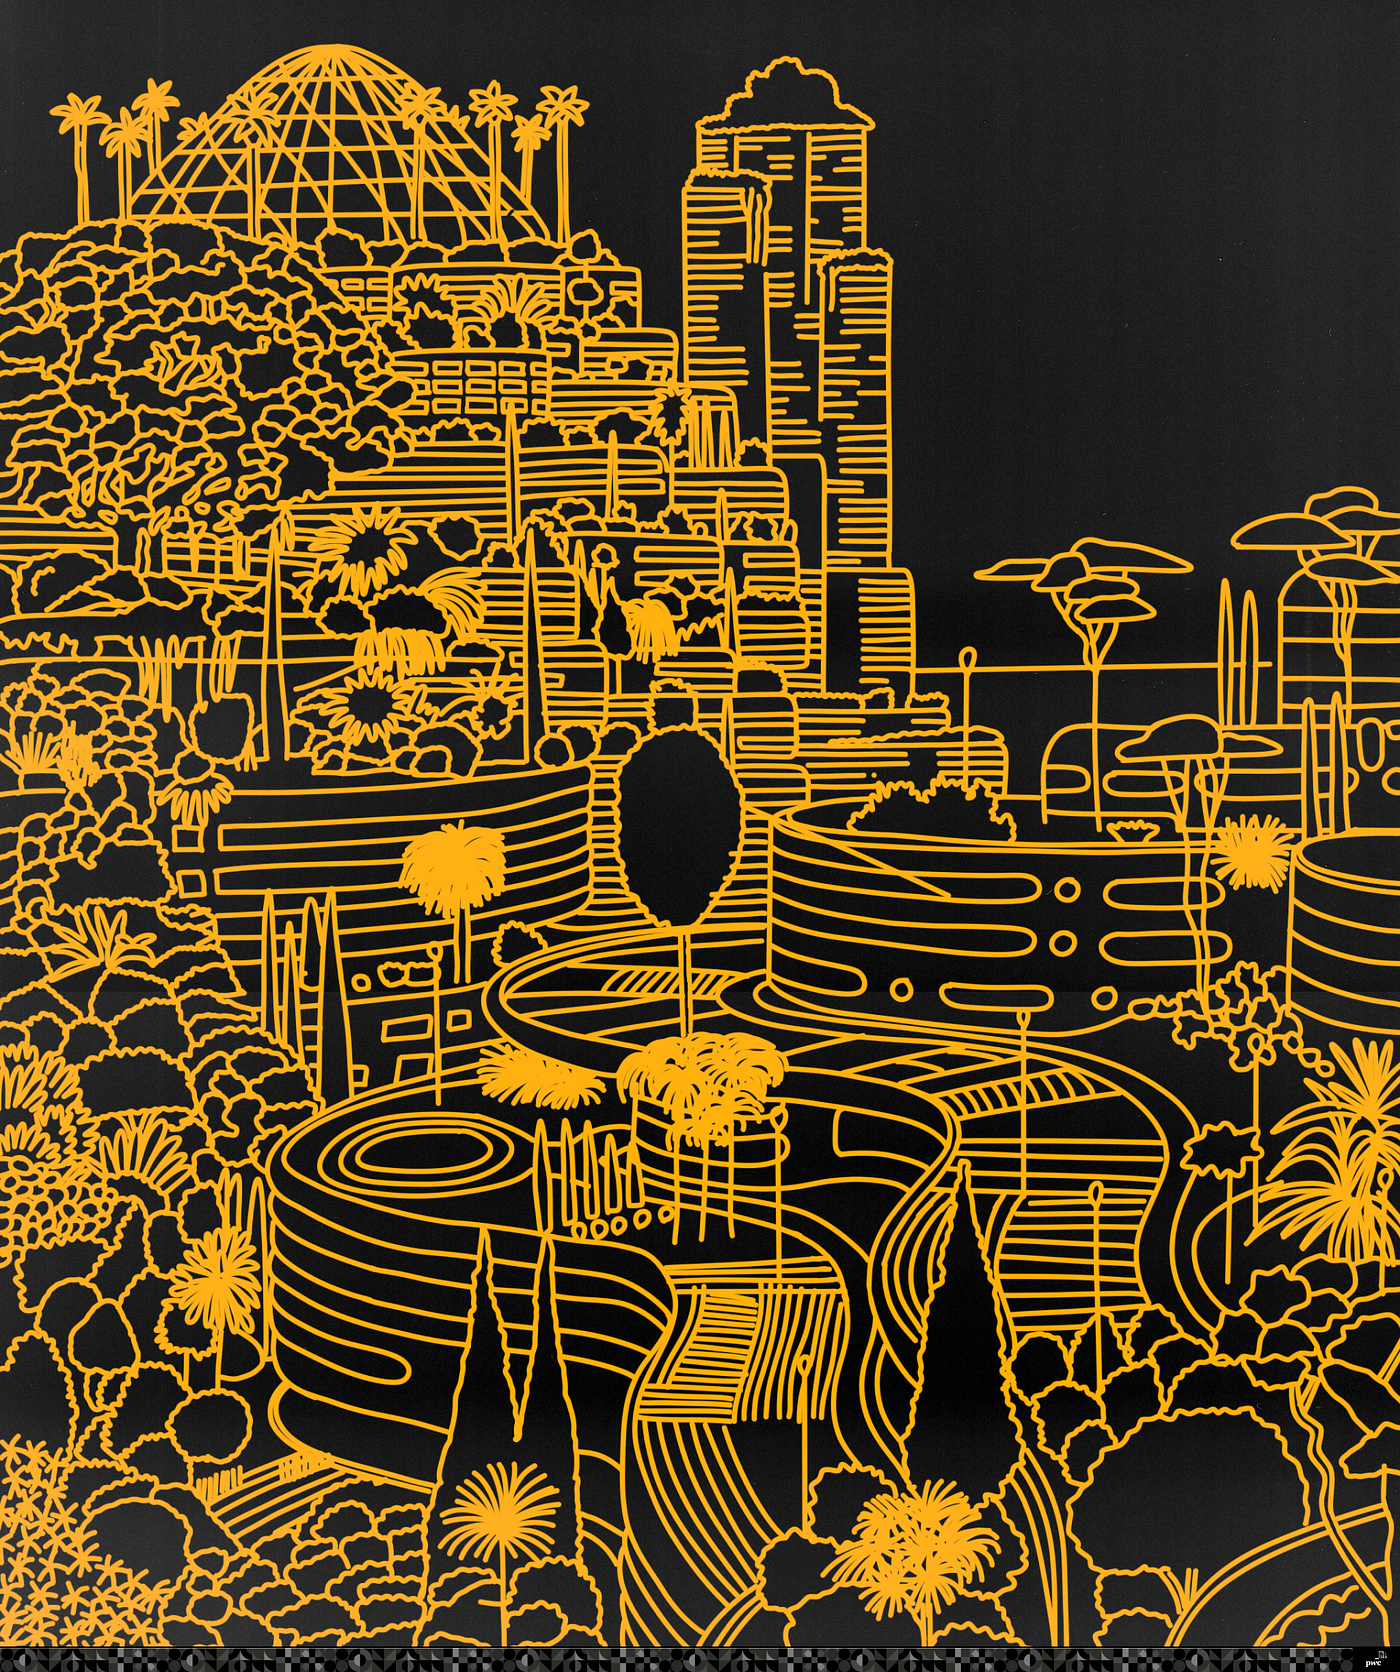 The Solarpunk City: Vertical, Horizontal or Something Else? : r